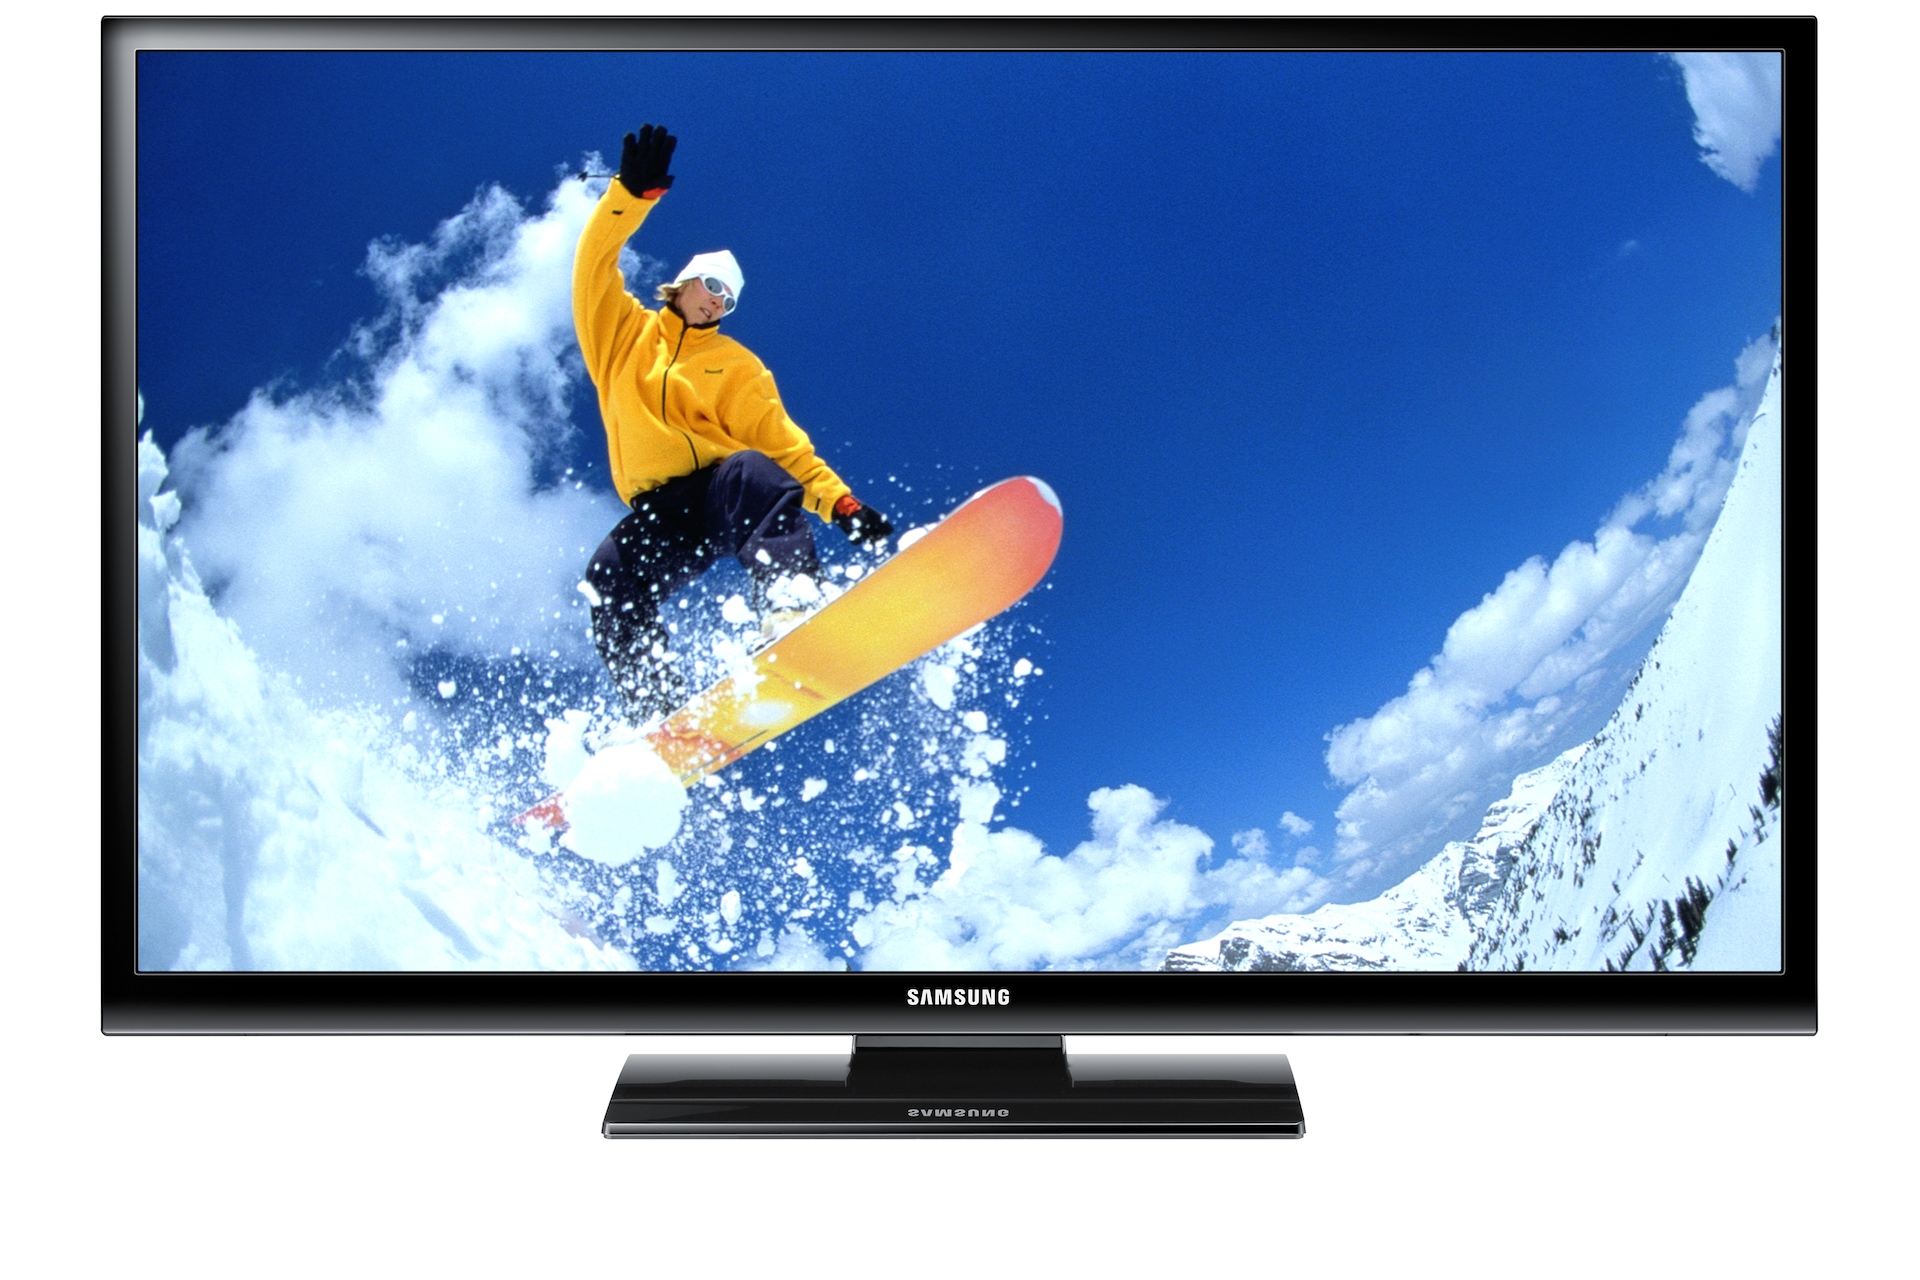 43" E450 Series 4 Plasma TV | Samsung Support UK